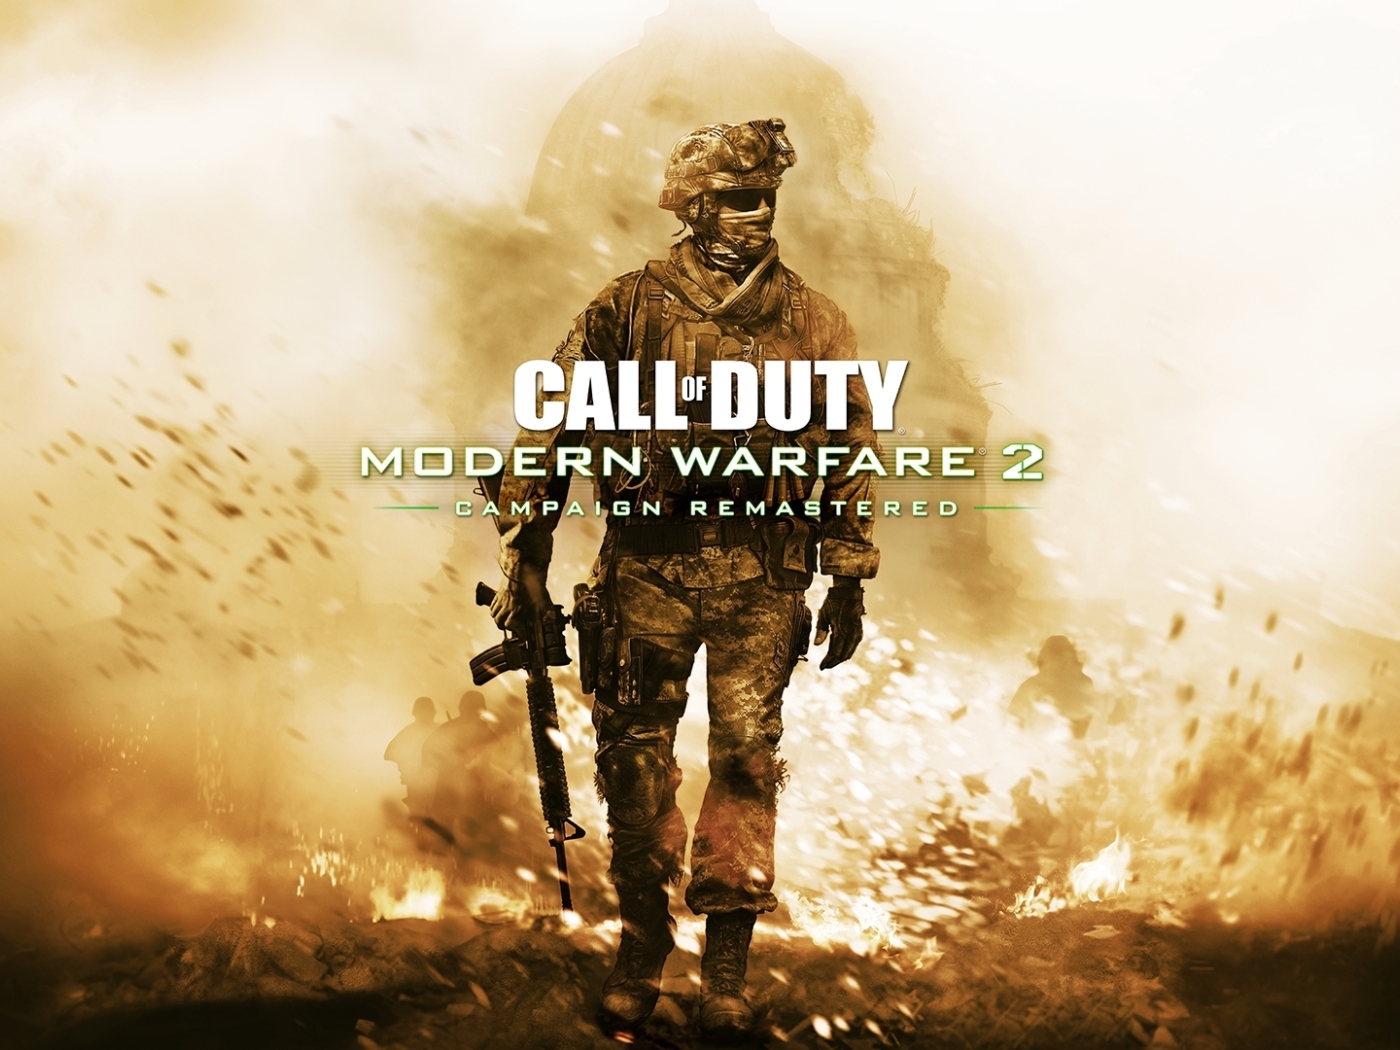 1400x1050 Call of Duty Modern Warfare 2 Campaign Remastered 1400x1050 ...